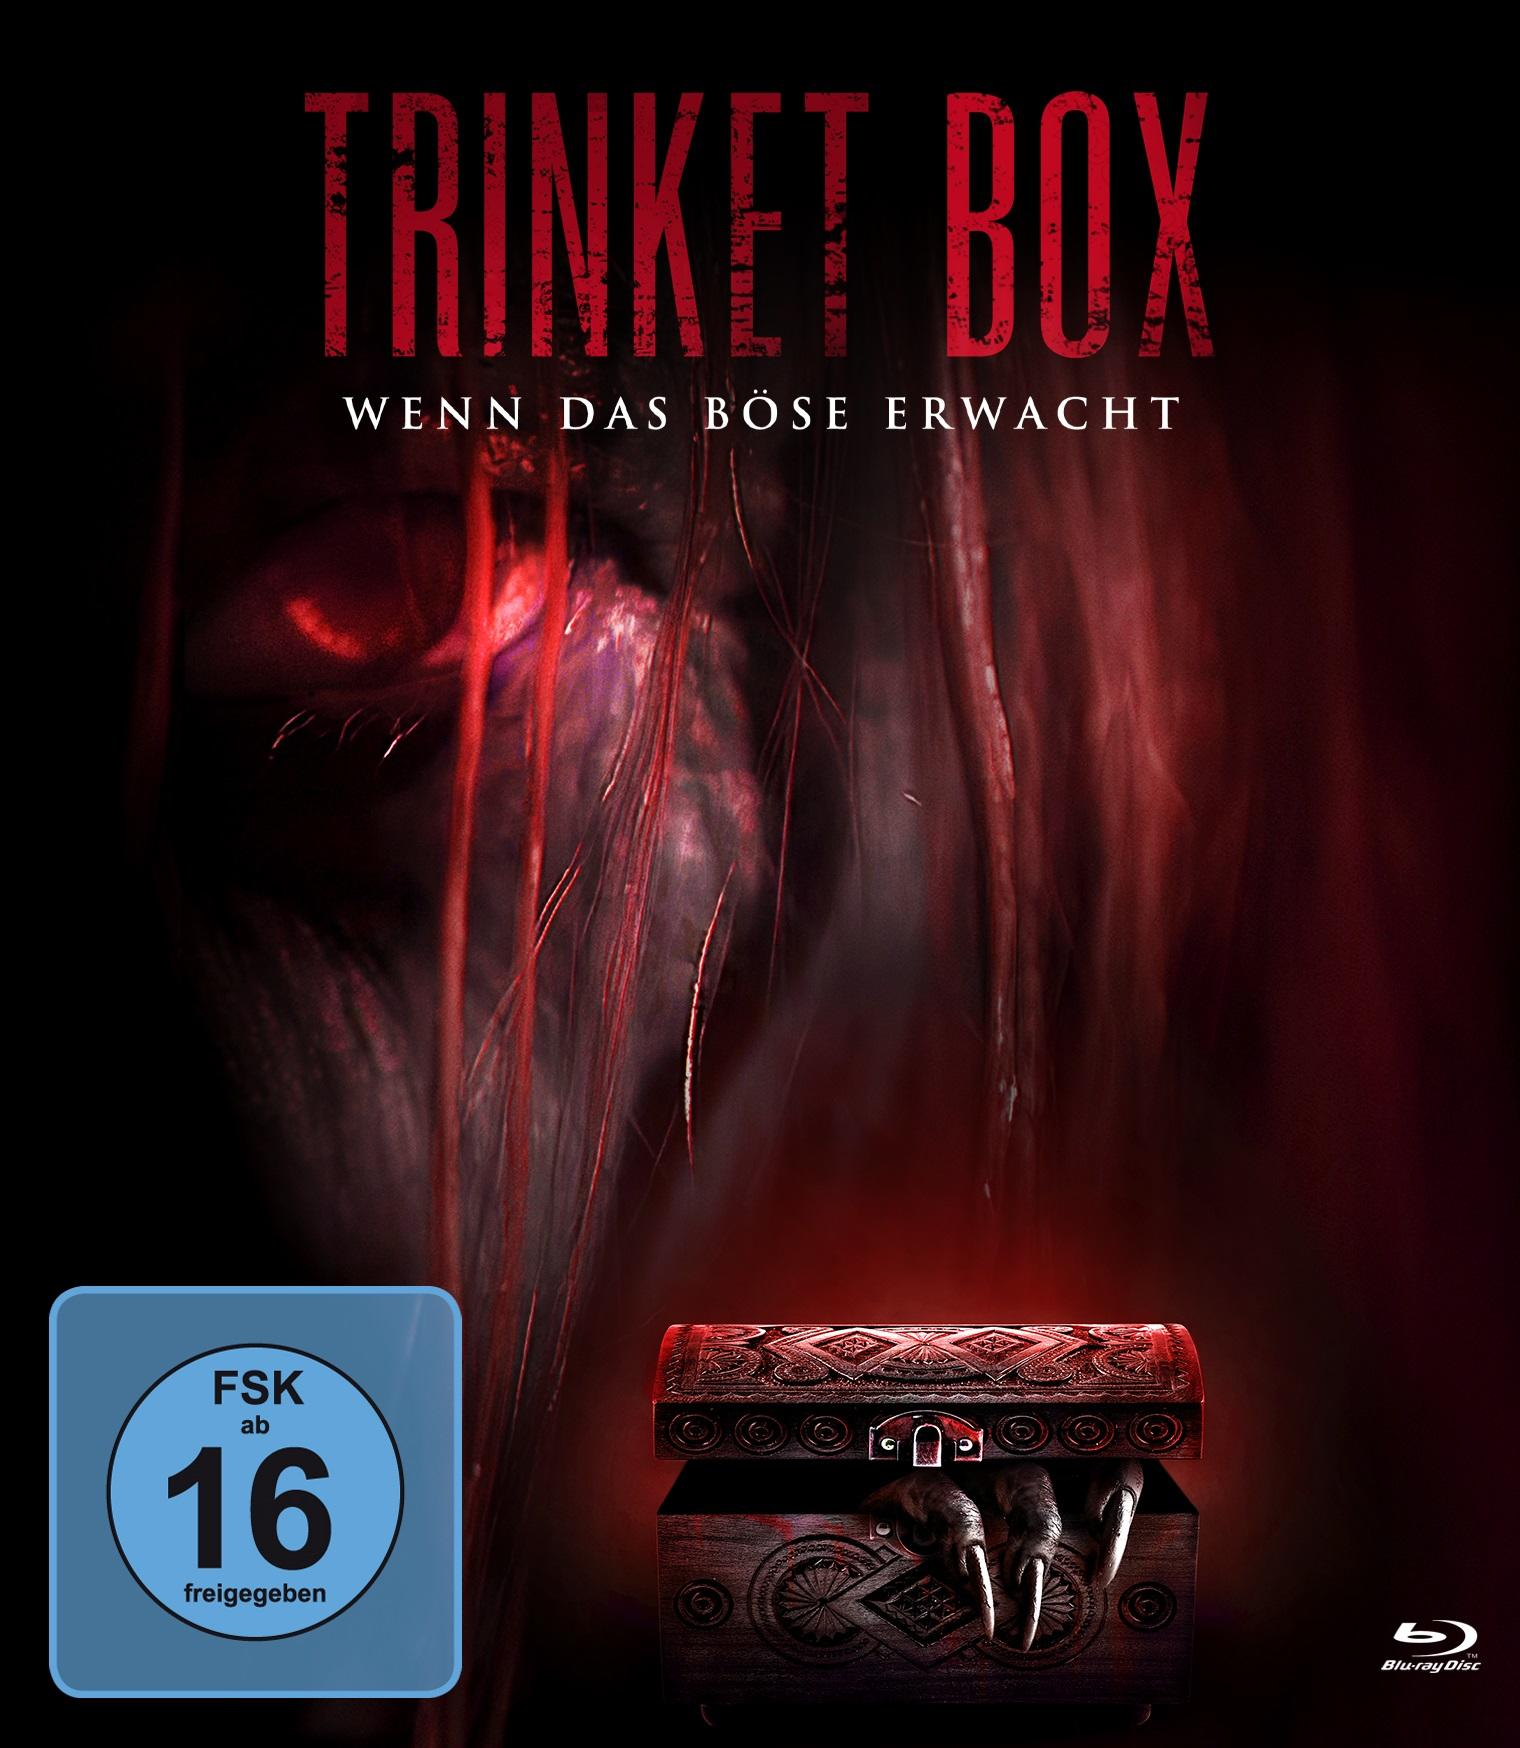 Trinket Box Blu-ray Das - Wenn Boese Erwacht